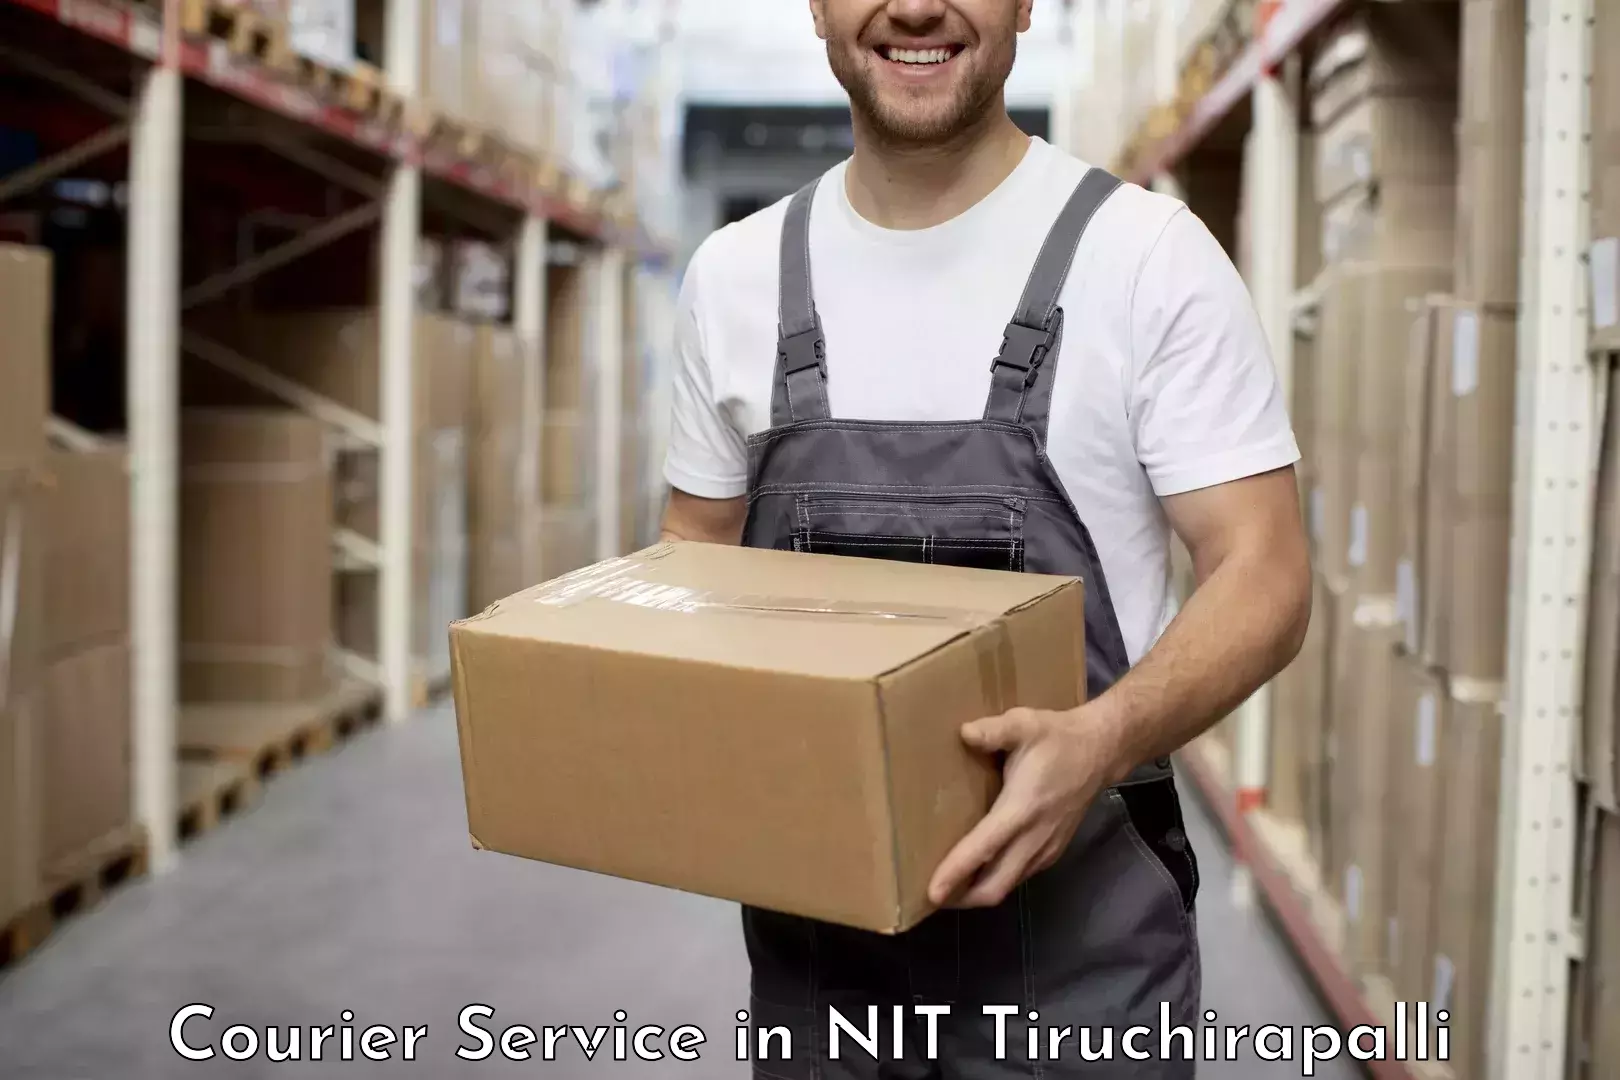 Logistics service provider in NIT Tiruchirapalli